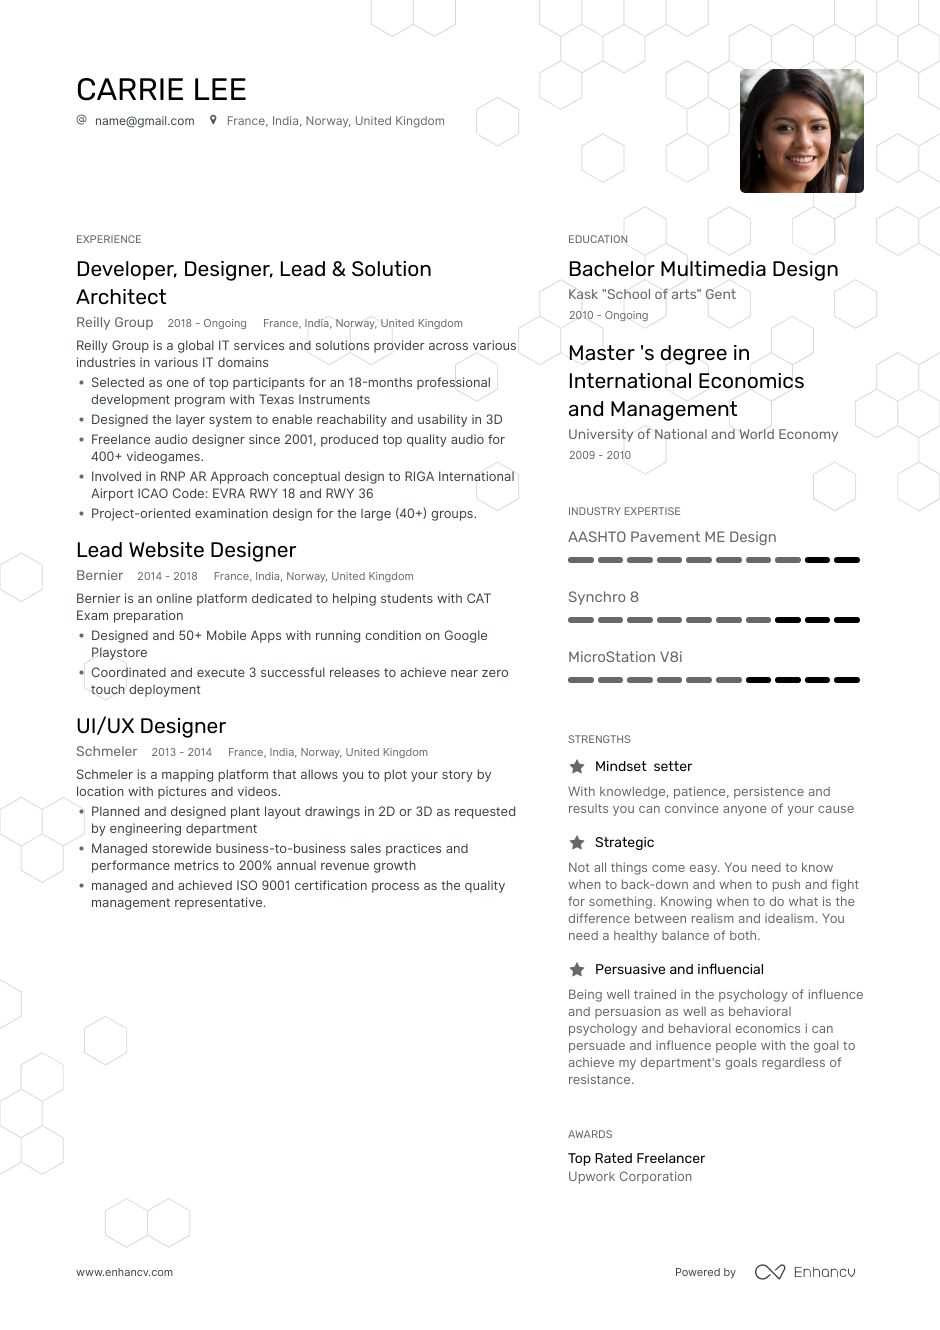 Sample Resume for Freelance Graphic Designer top Graphic Designer Resume Examples & Samples for 2021 Enhancv.com